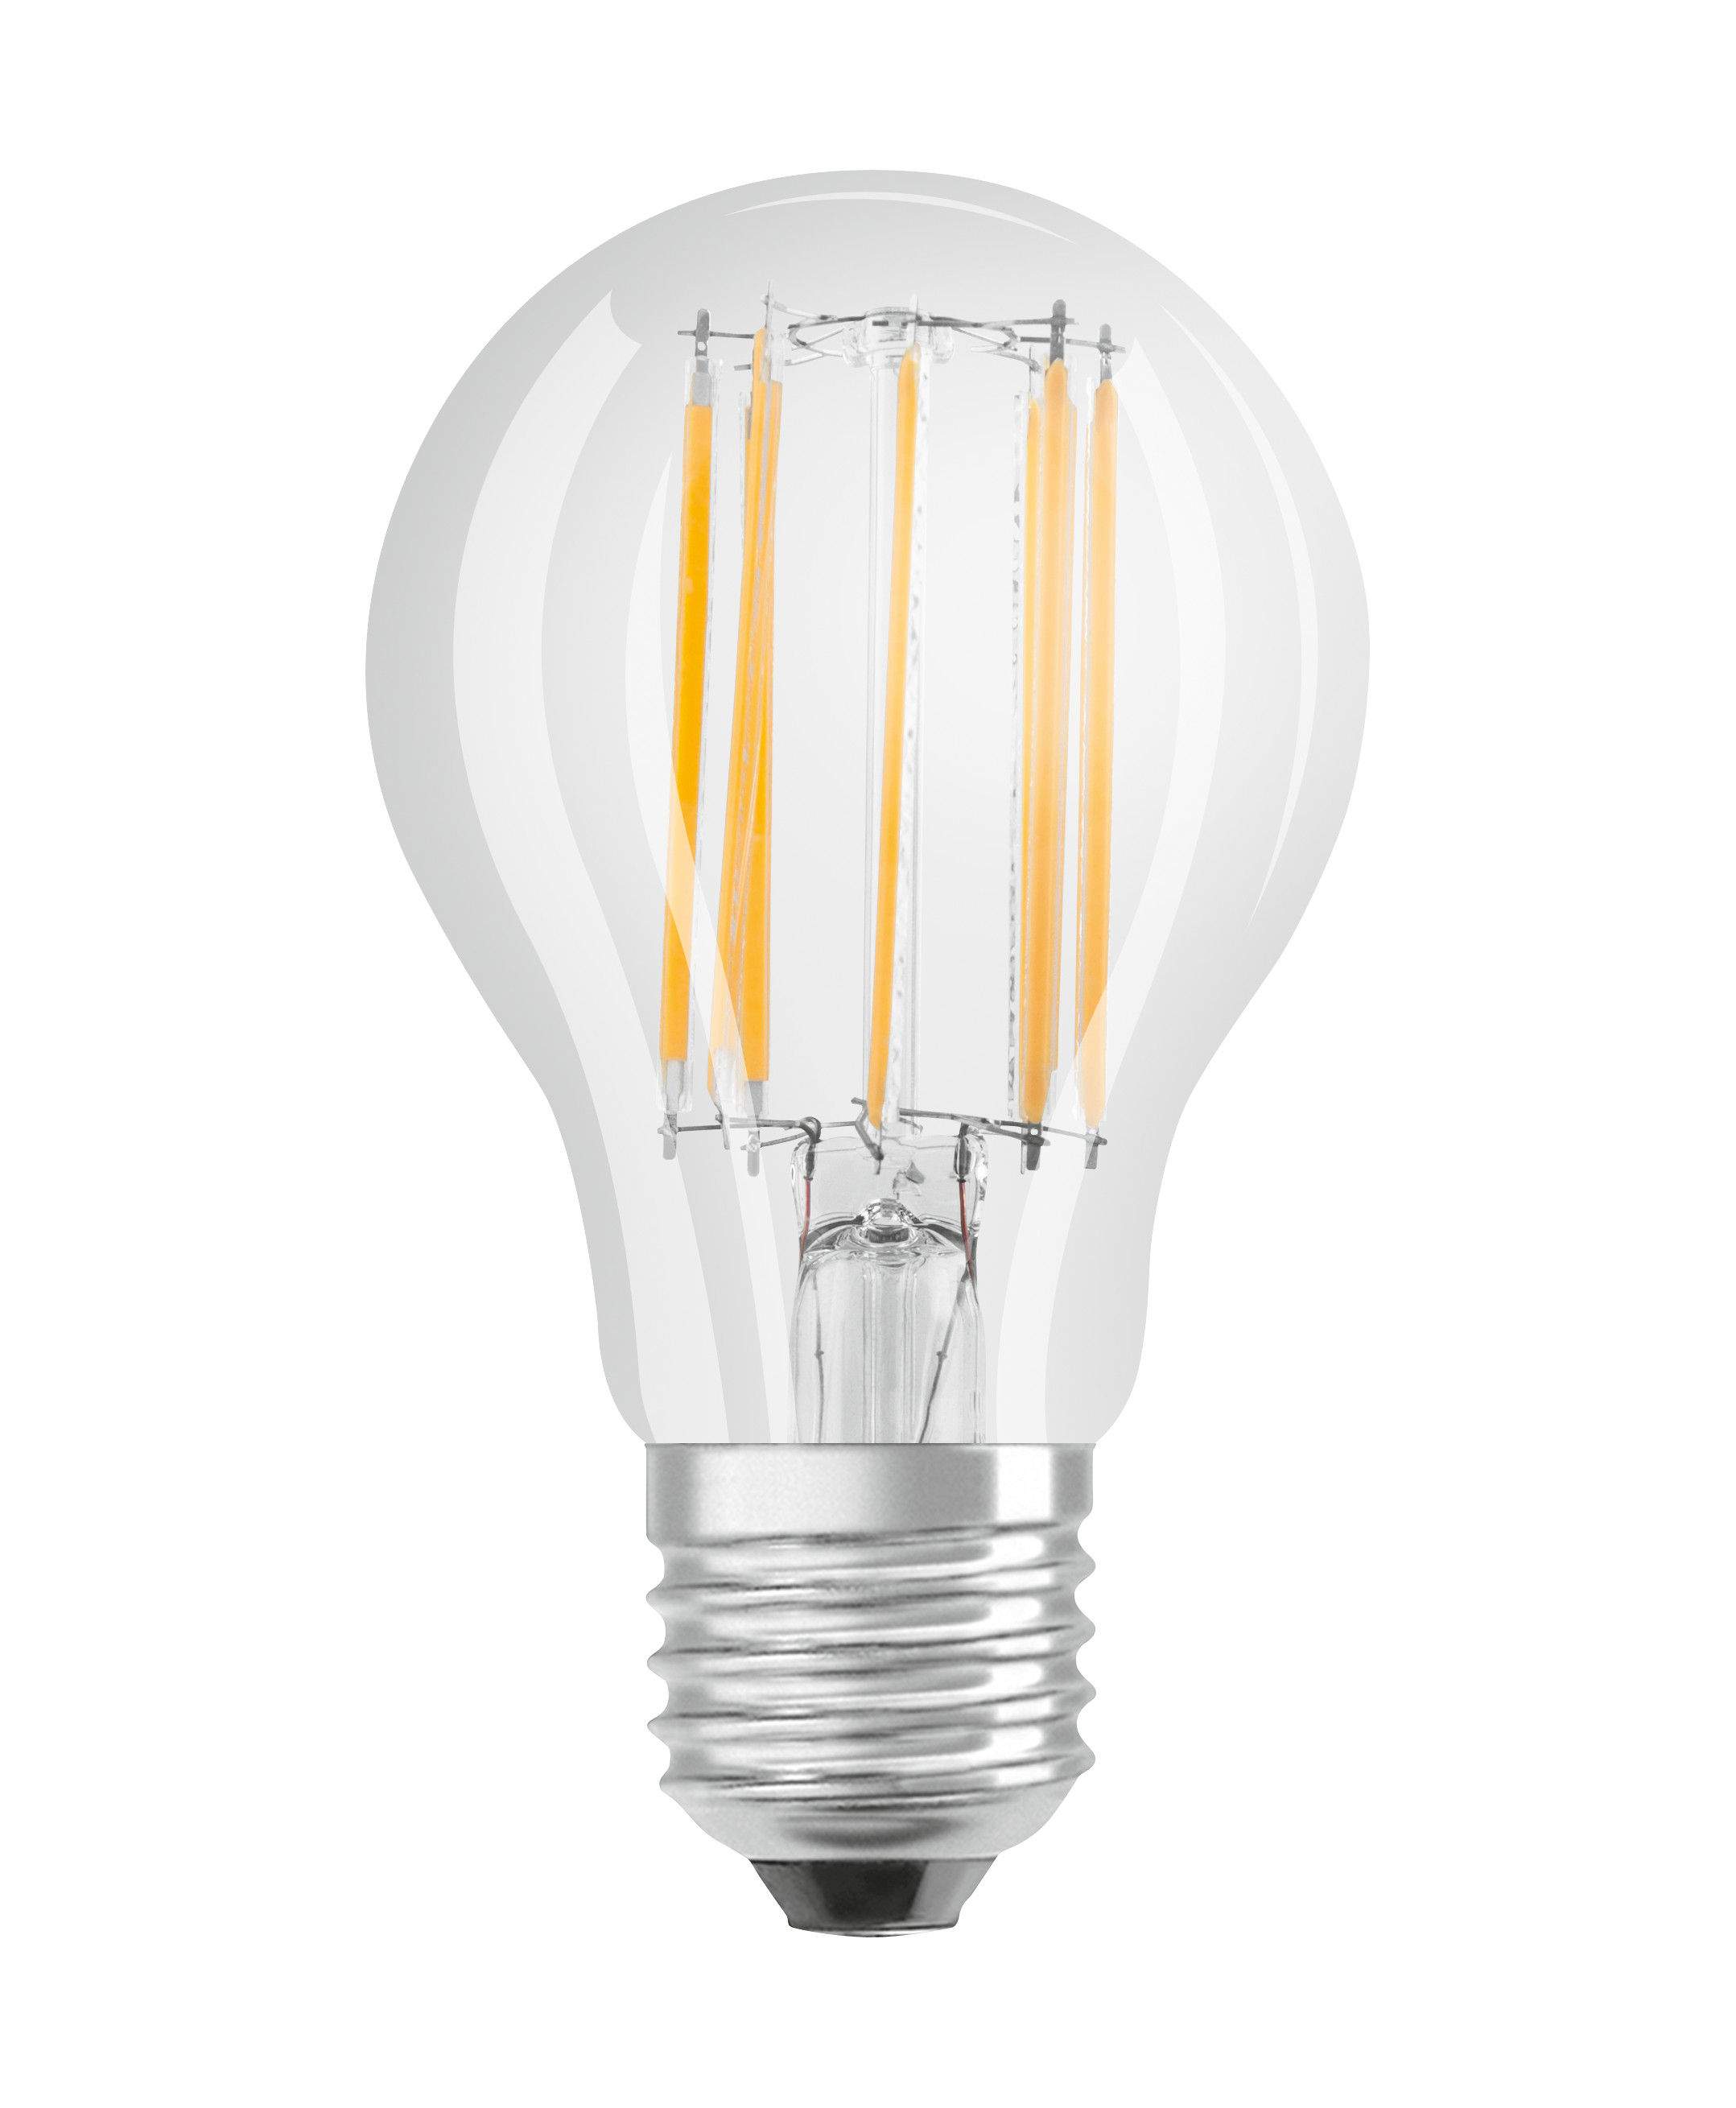 E27 standard clear glass LED bulb, 4W, warm white.